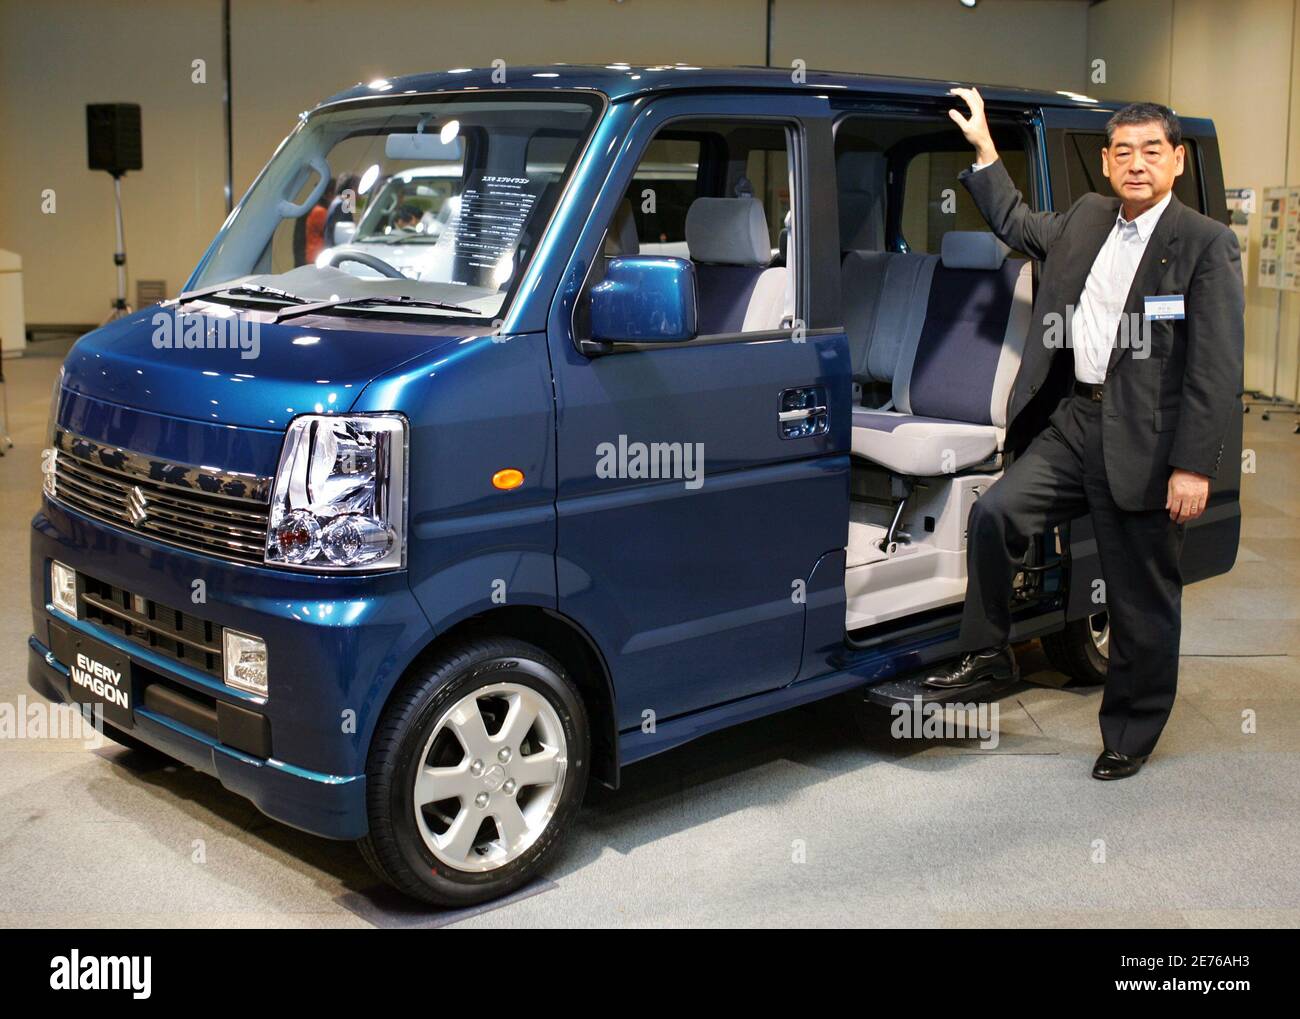 Suzuki mini van hi-res stock photography and images - Alamy